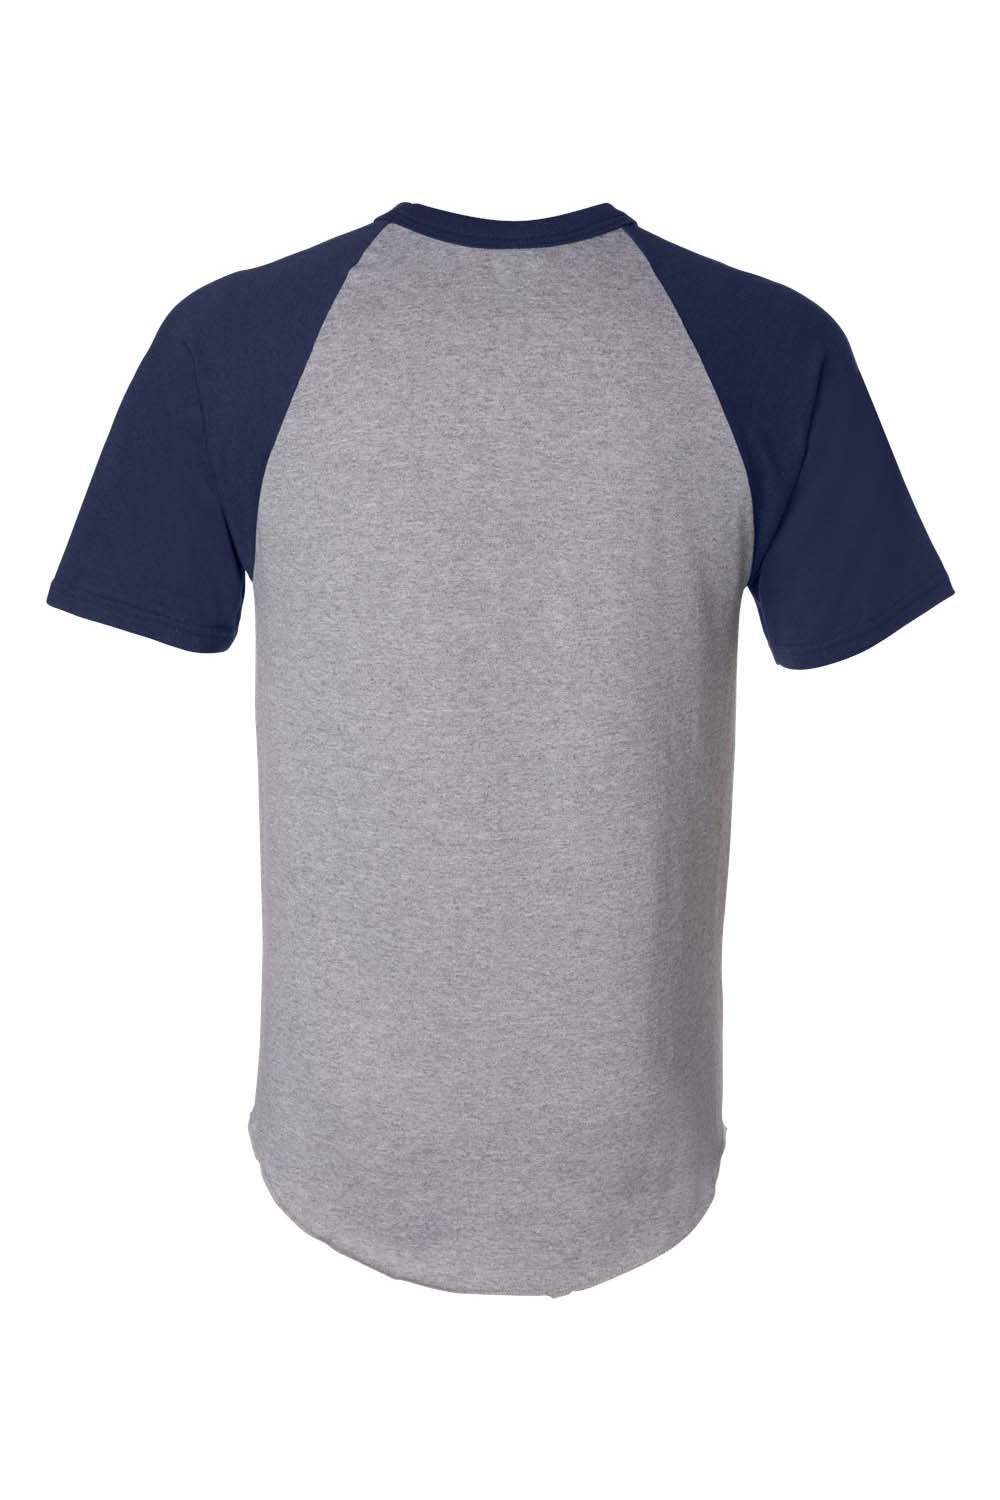 Augusta Sportswear 423 Mens Short Sleeve Crewneck T-Shirt Heather Grey/Navy Blue Model Flat Back